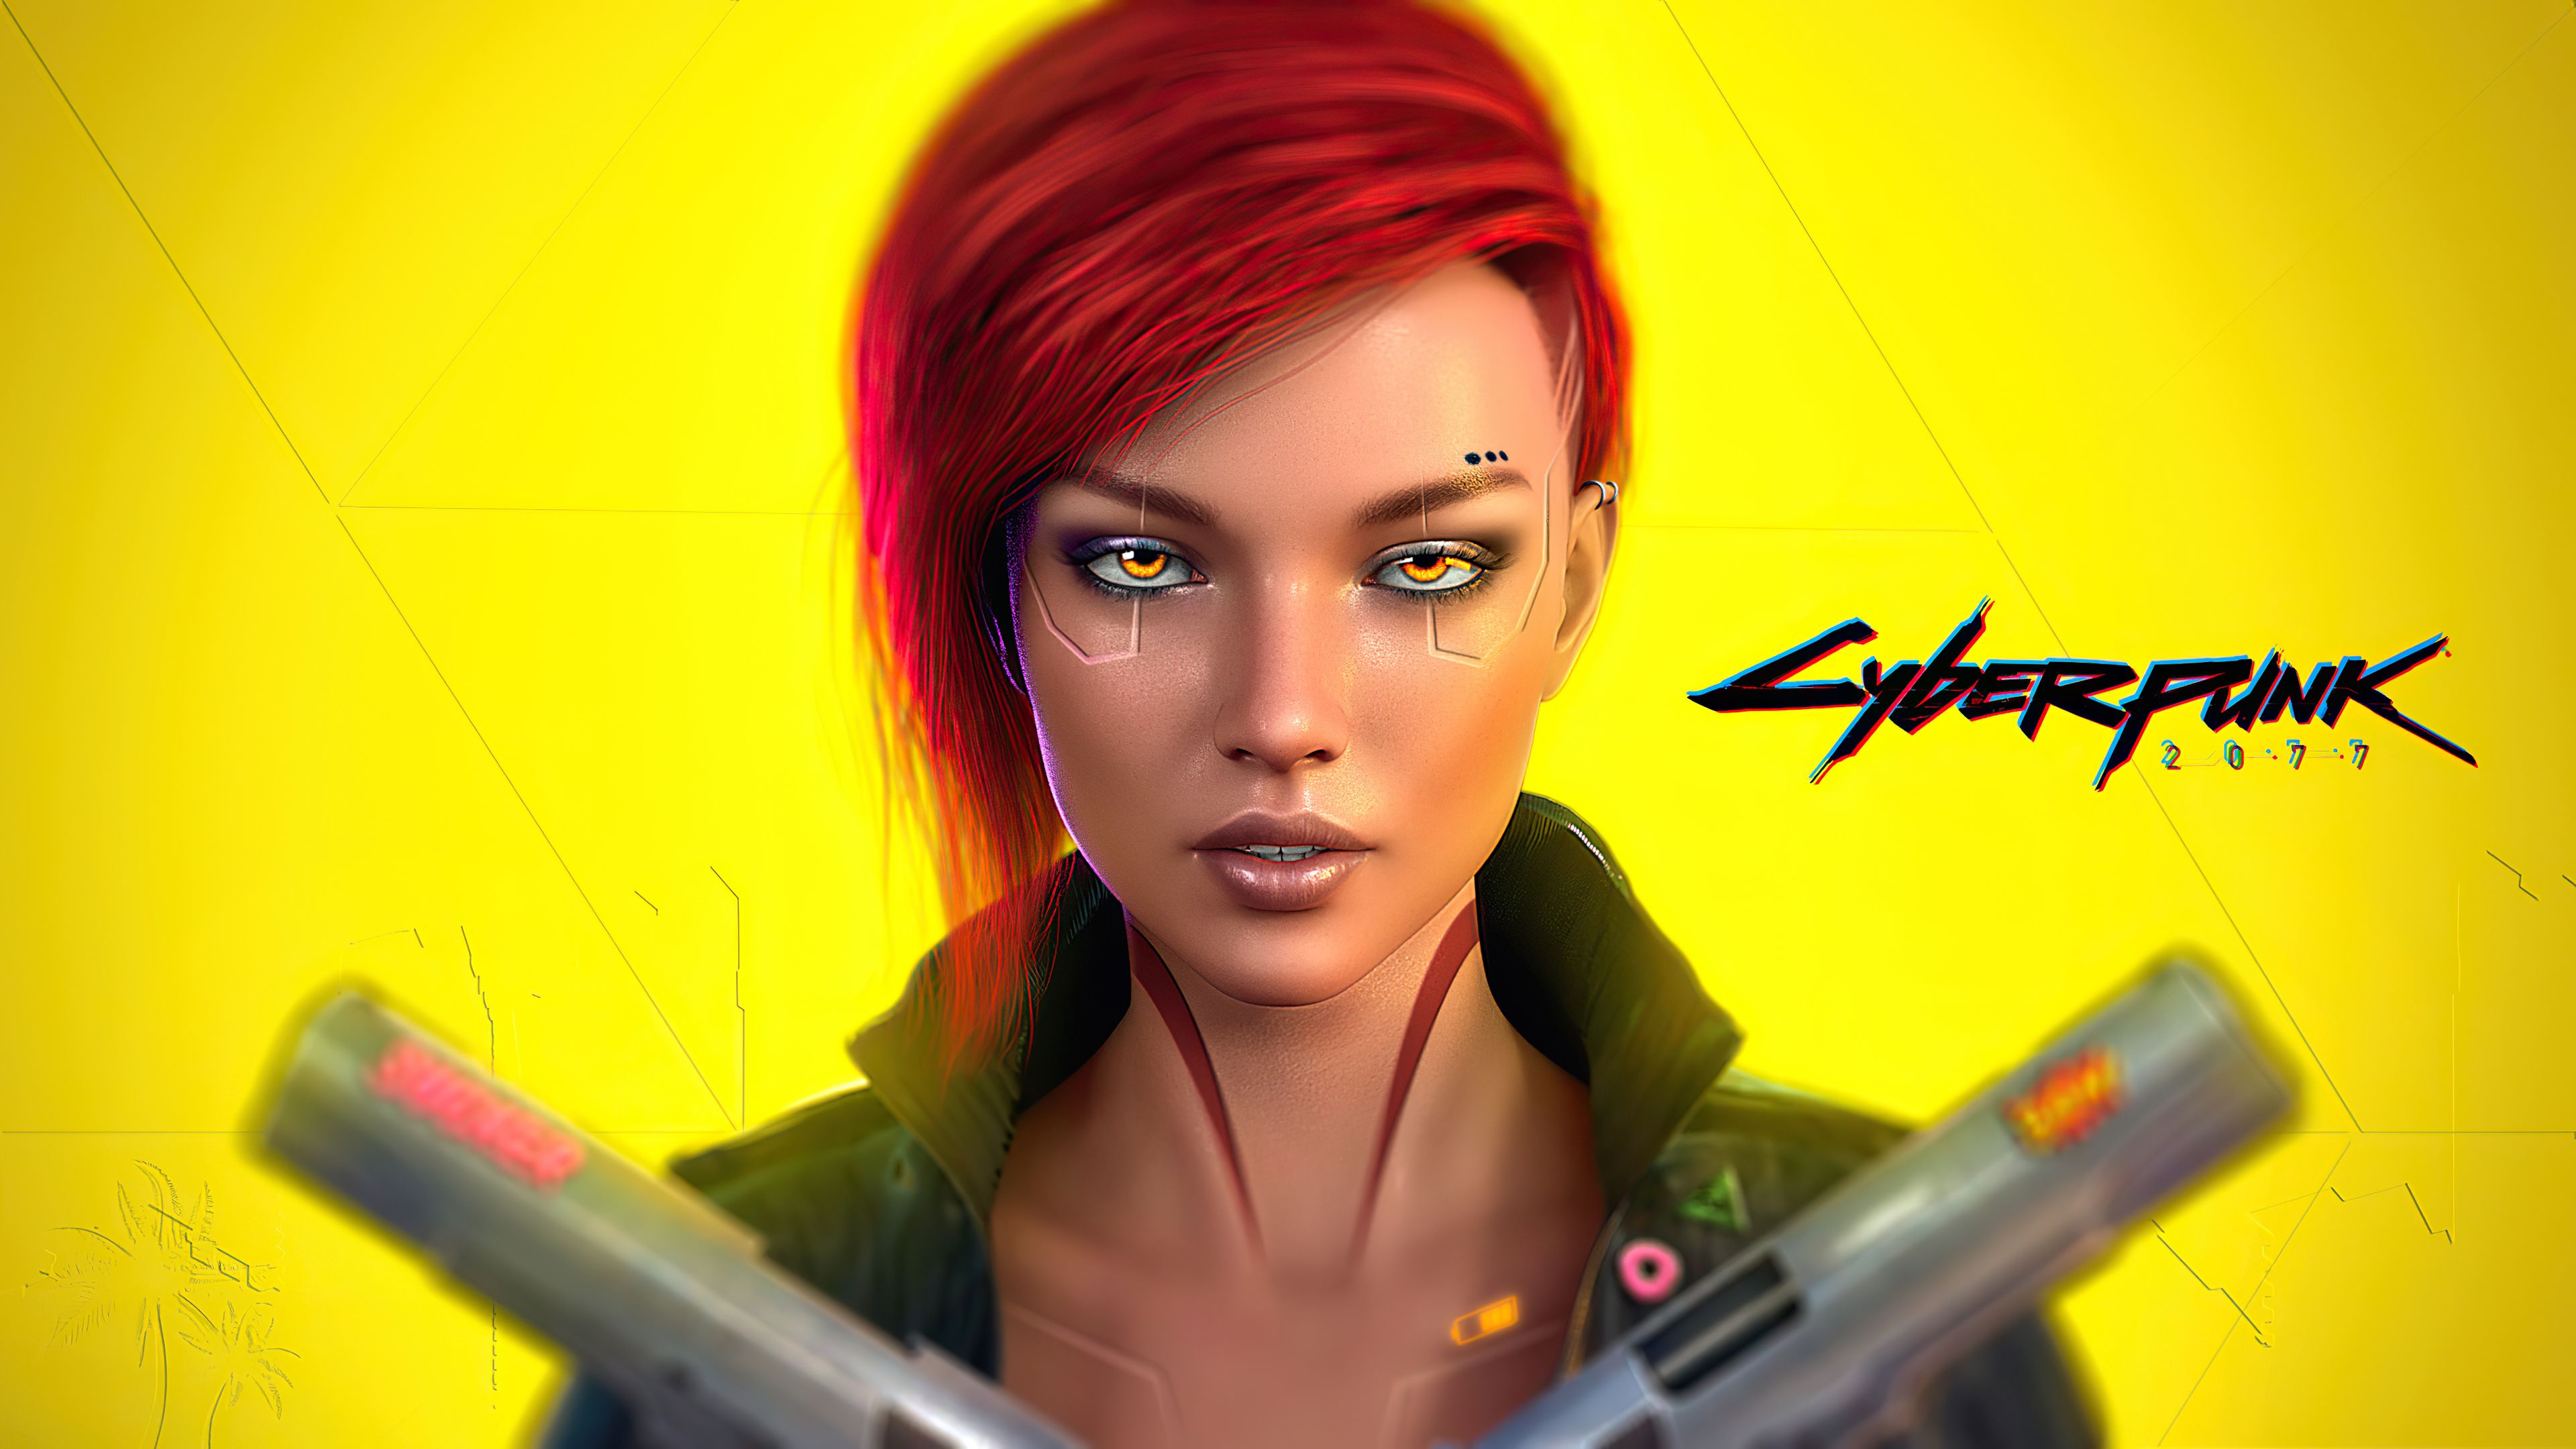 Female V 4K Wallpaper, Cyberpunk Cover Art, Yellow background, PlayStation Games